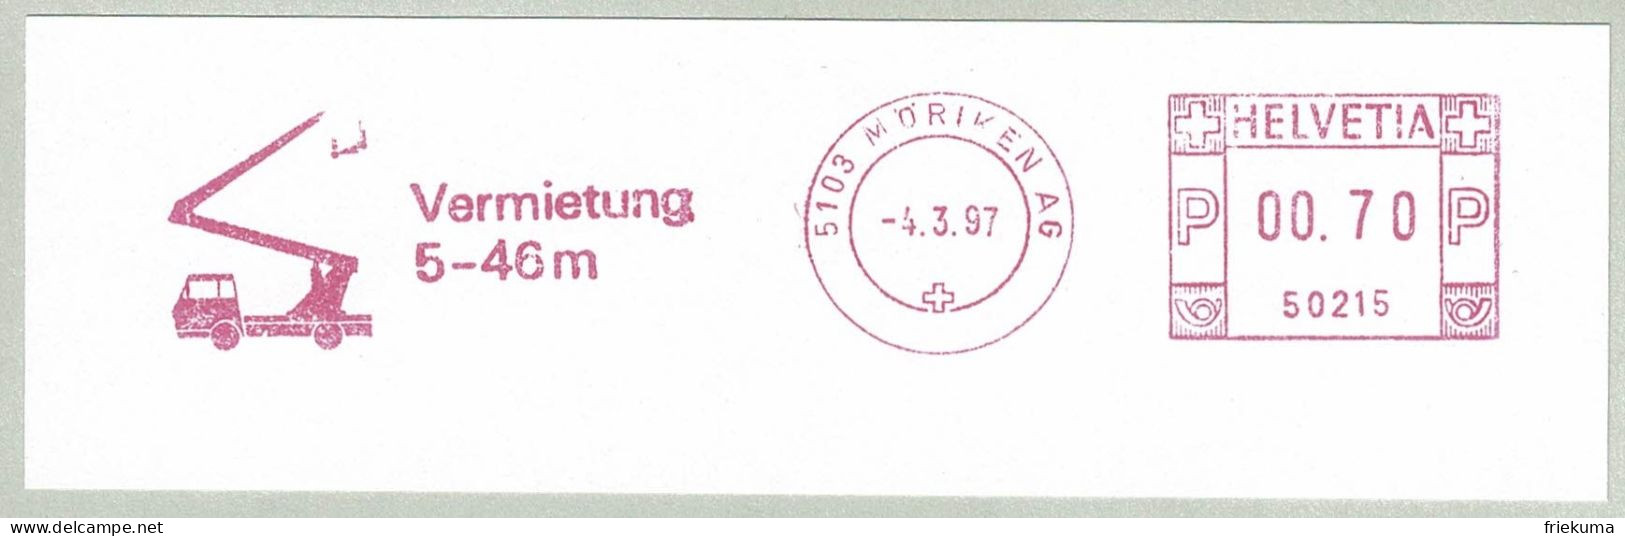 Schweiz / Helvetia 1997, Freistempel / EMA / Meterstamp Möriken, Vermietung Autokrane / Renting Truck Cranes - Camions